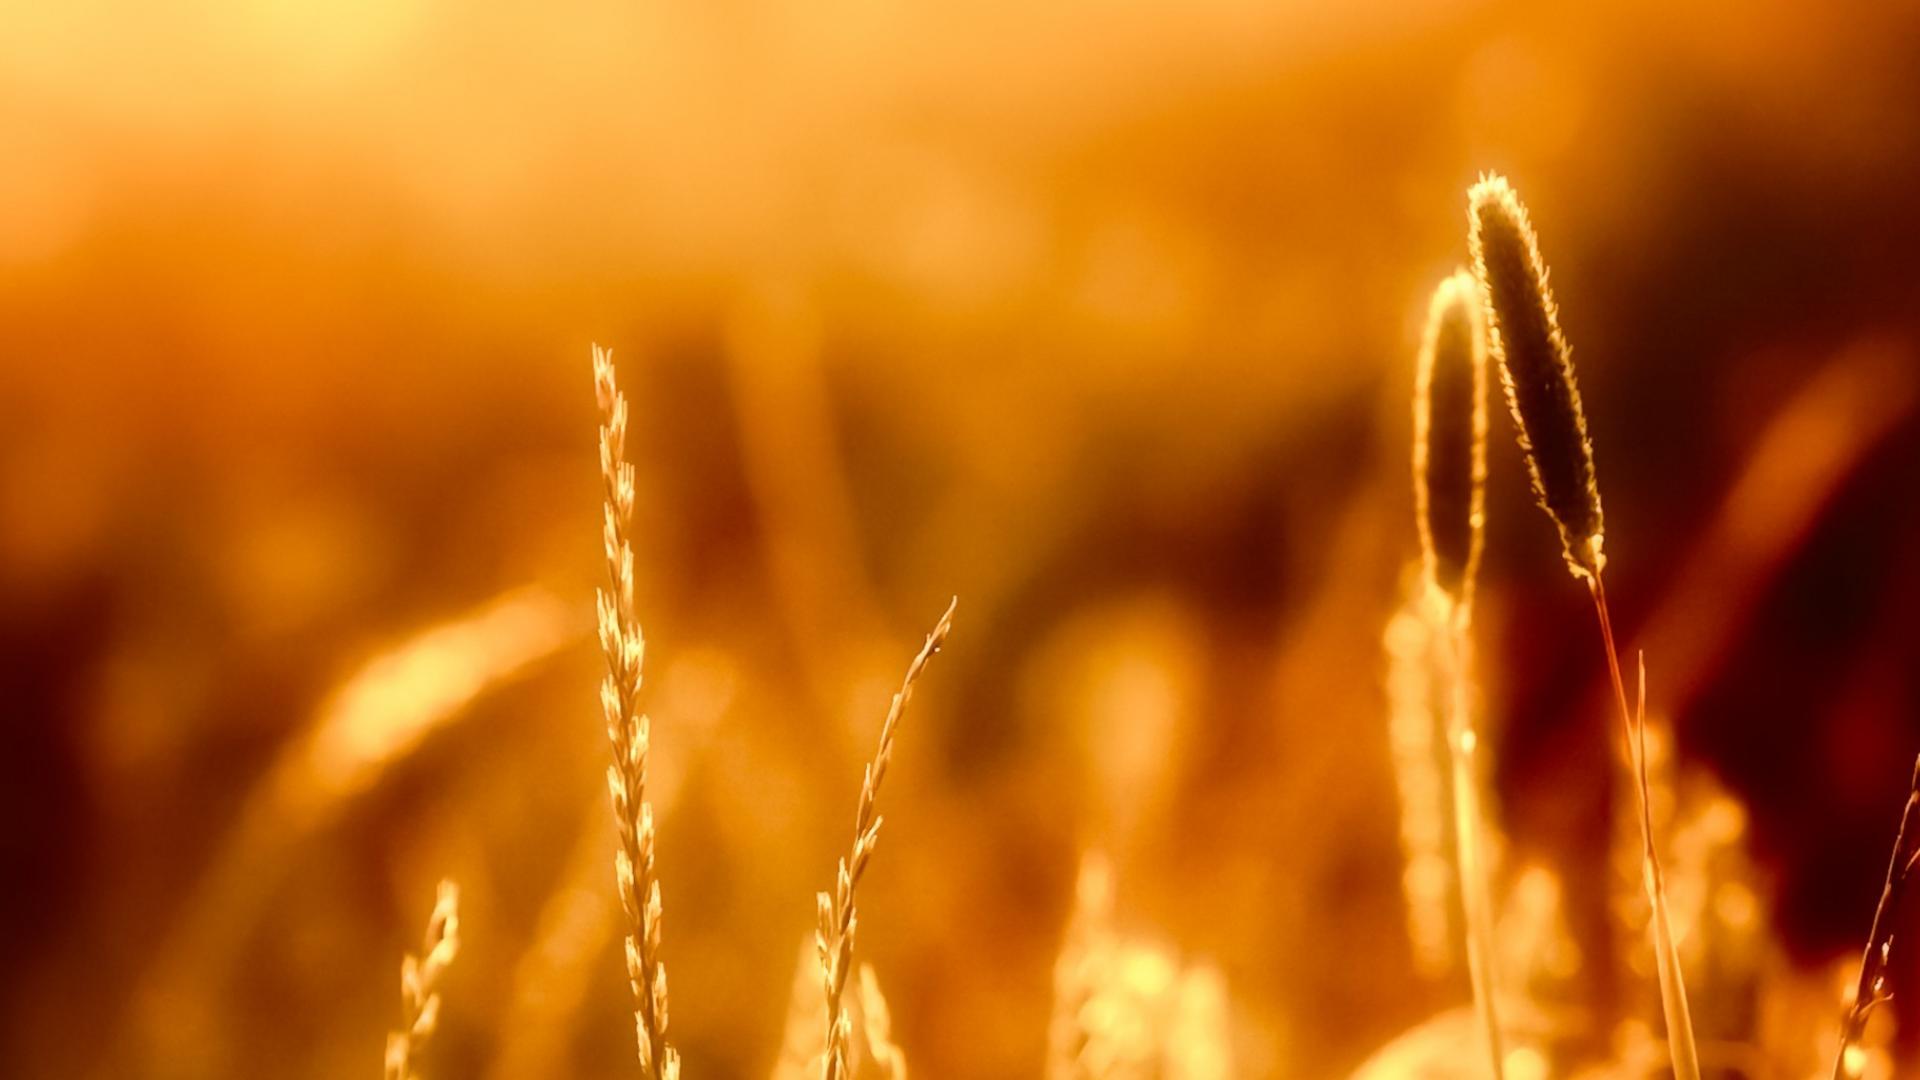 🥇 Nature golden sunlight reeds blurred background wallpaper | (117024)